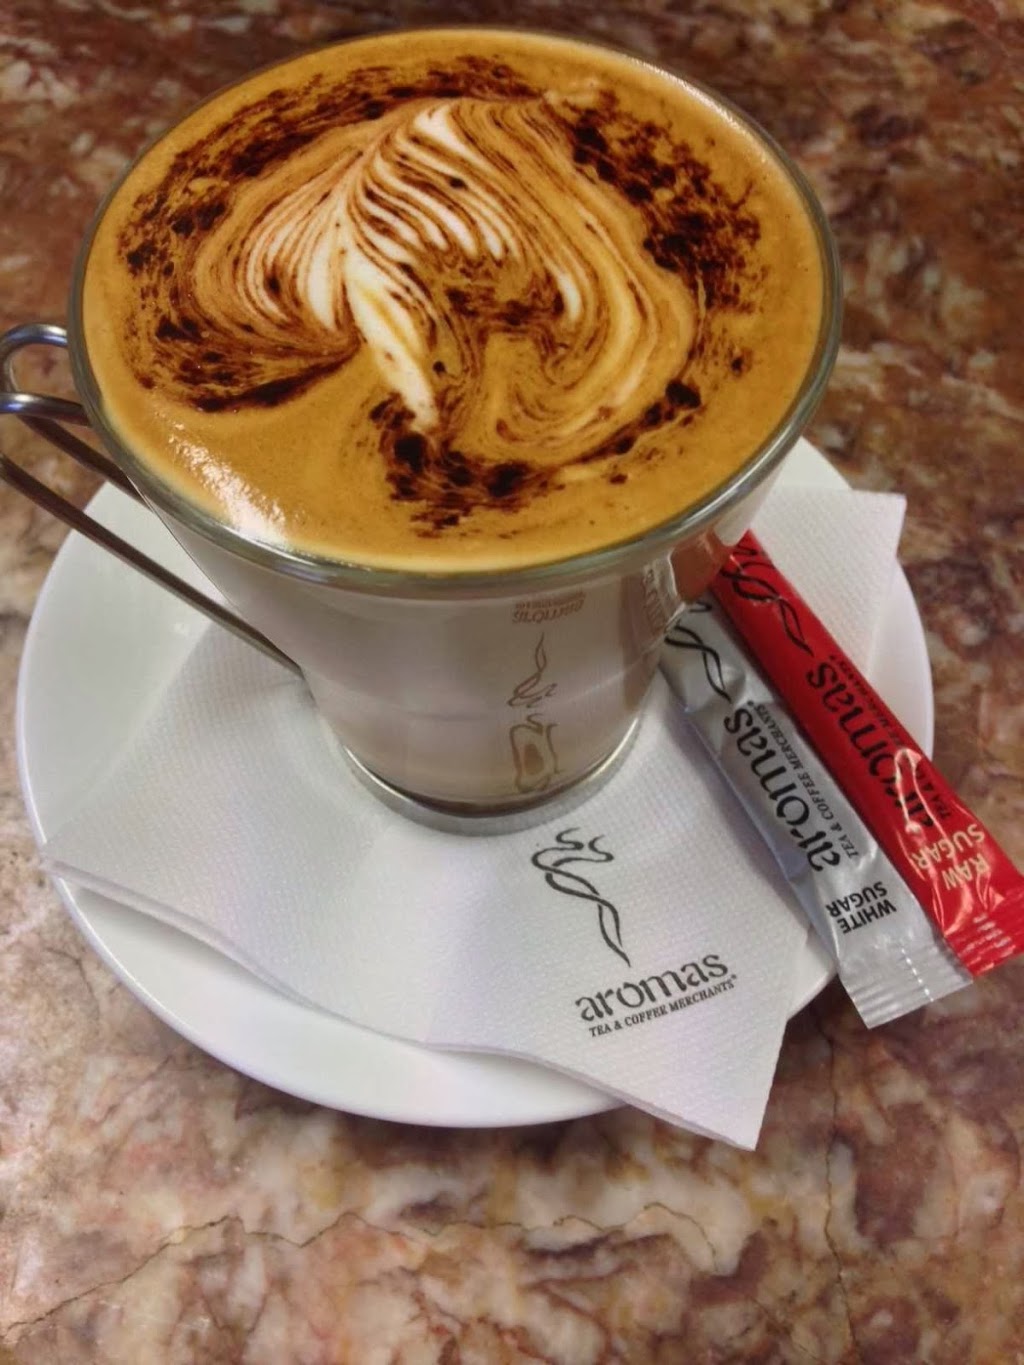 Aromas Coffee Roasters | 60 Alexandra Pl, Murarrie QLD 4172, Australia | Phone: (07) 3393 9324